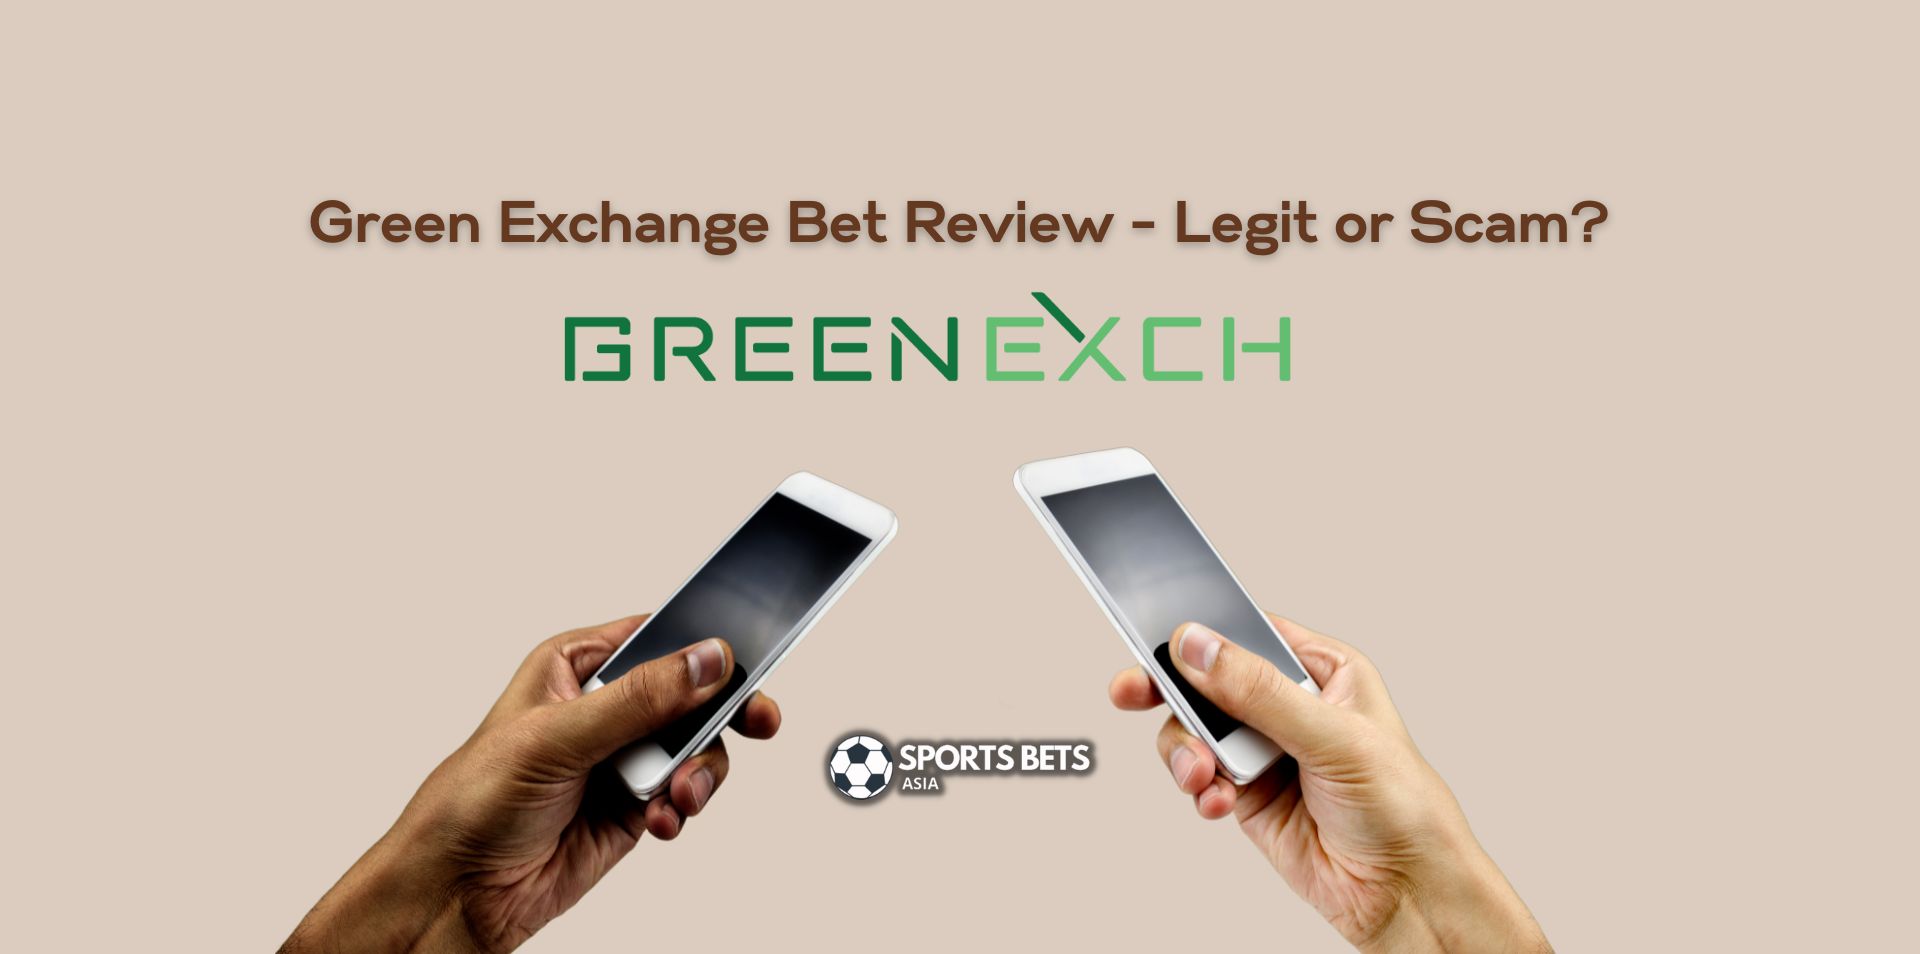 Green exchange bet review